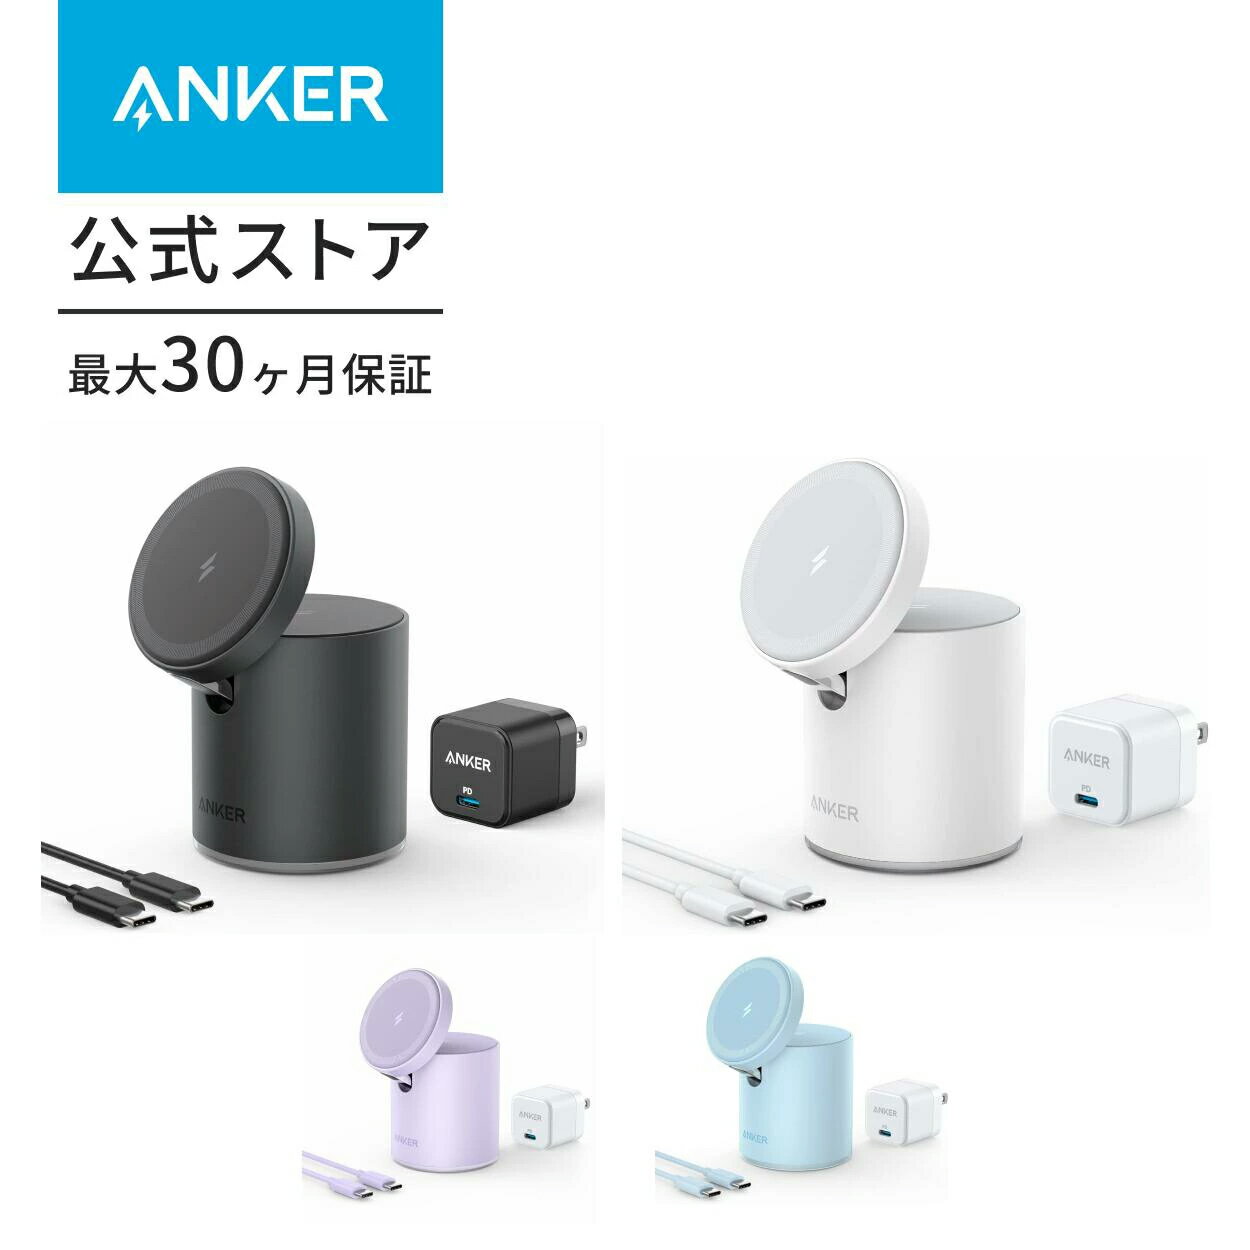 Anker 急速充電器 Anker 623 Magnetic Wireless Charger (MagGo)(マグネット式 2-in-1 ワイヤレス充電ステーション)【USB急速充電器付属/マグネット式/ワイヤレス出力 (7.5W)】MagSafe対応iPhoneシリーズ専用